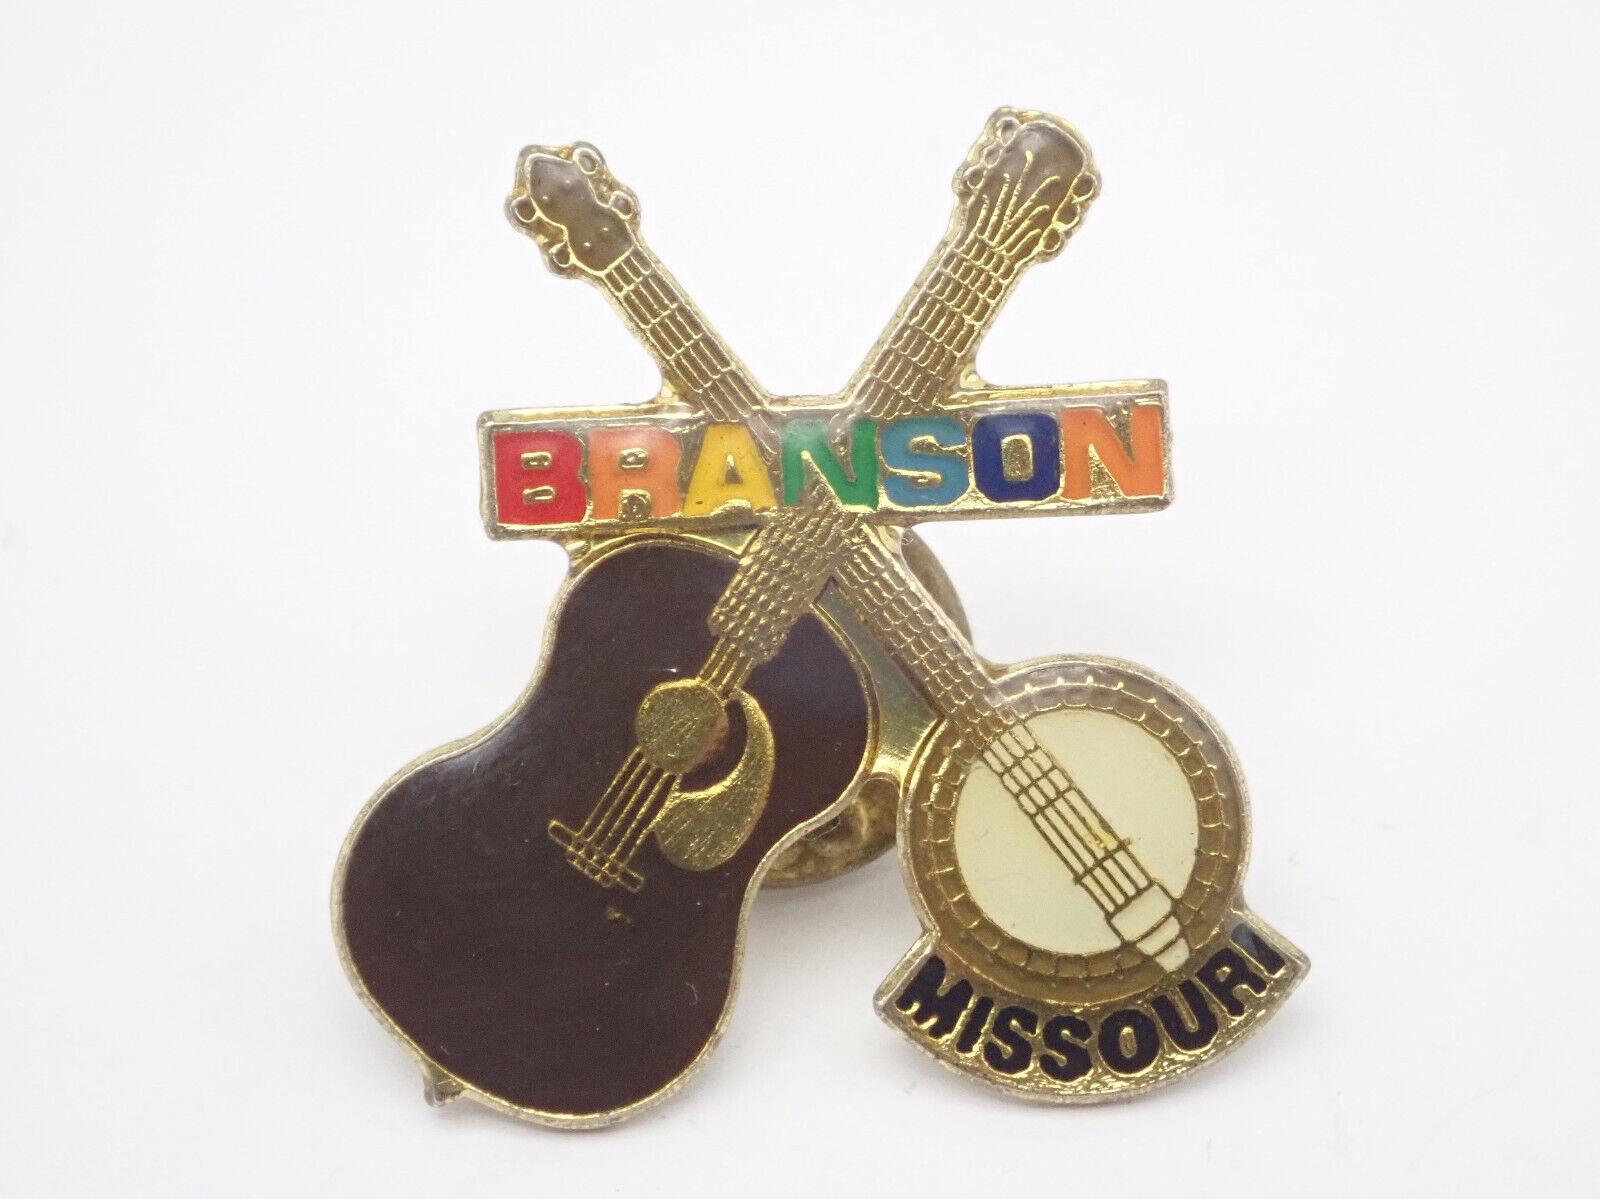 Branson Missouri Guitar and Banjo Vintage Lapel Pin